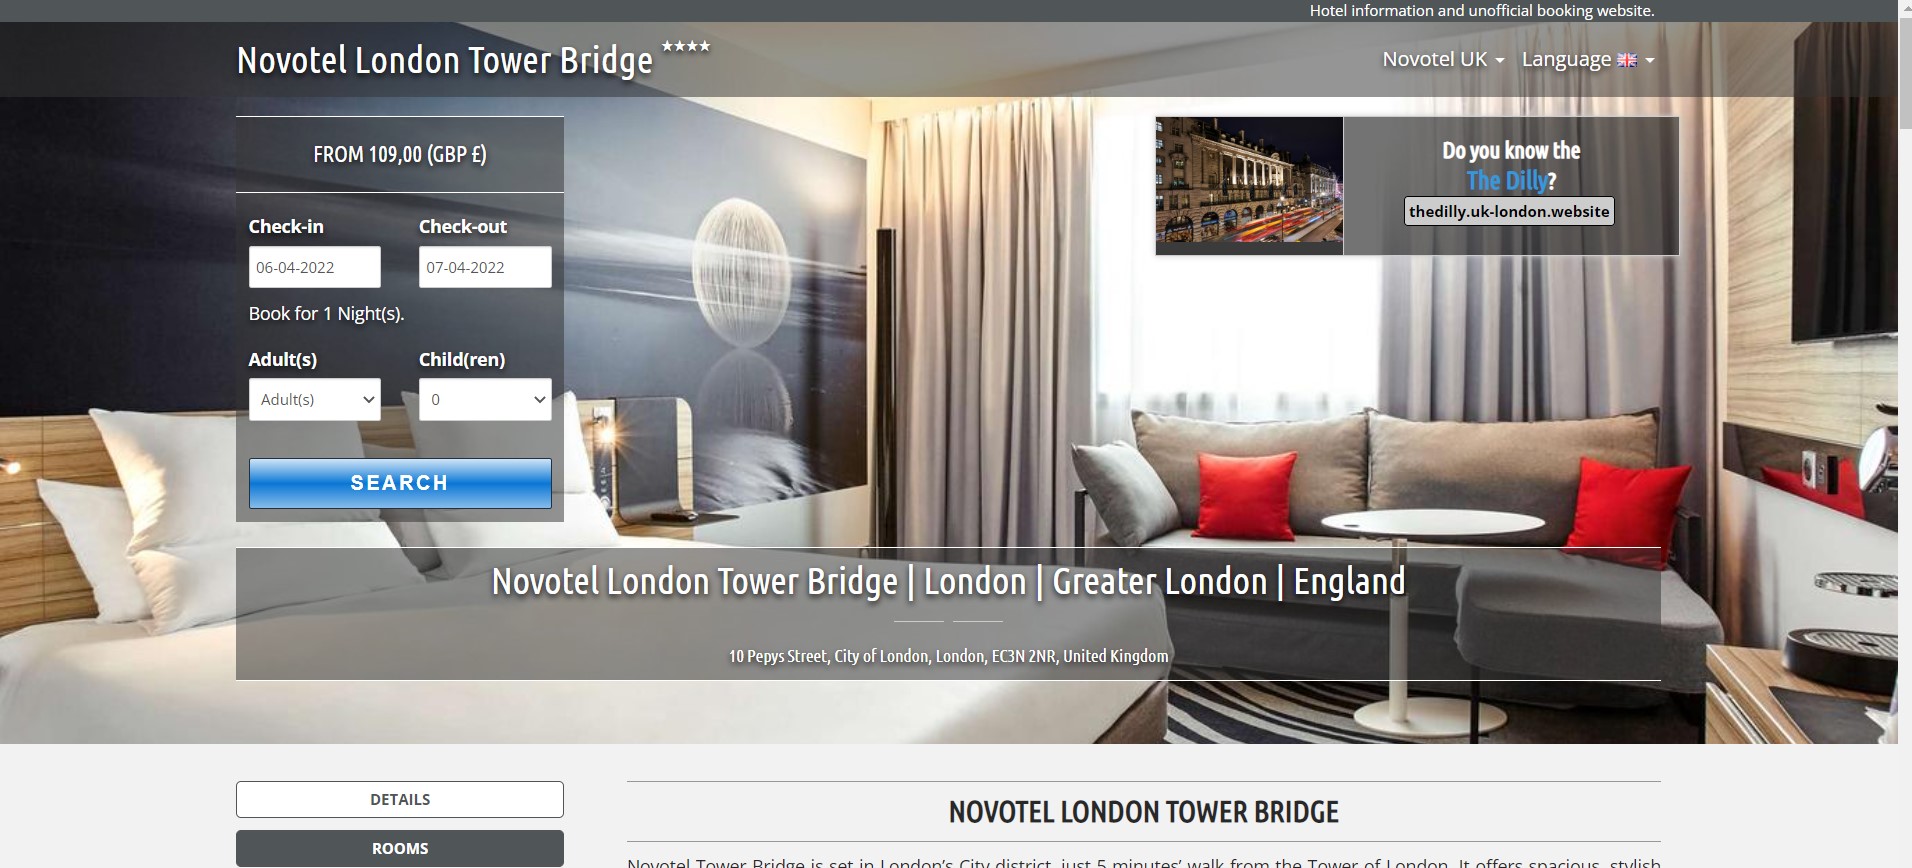 Novotel London Tower Bridge